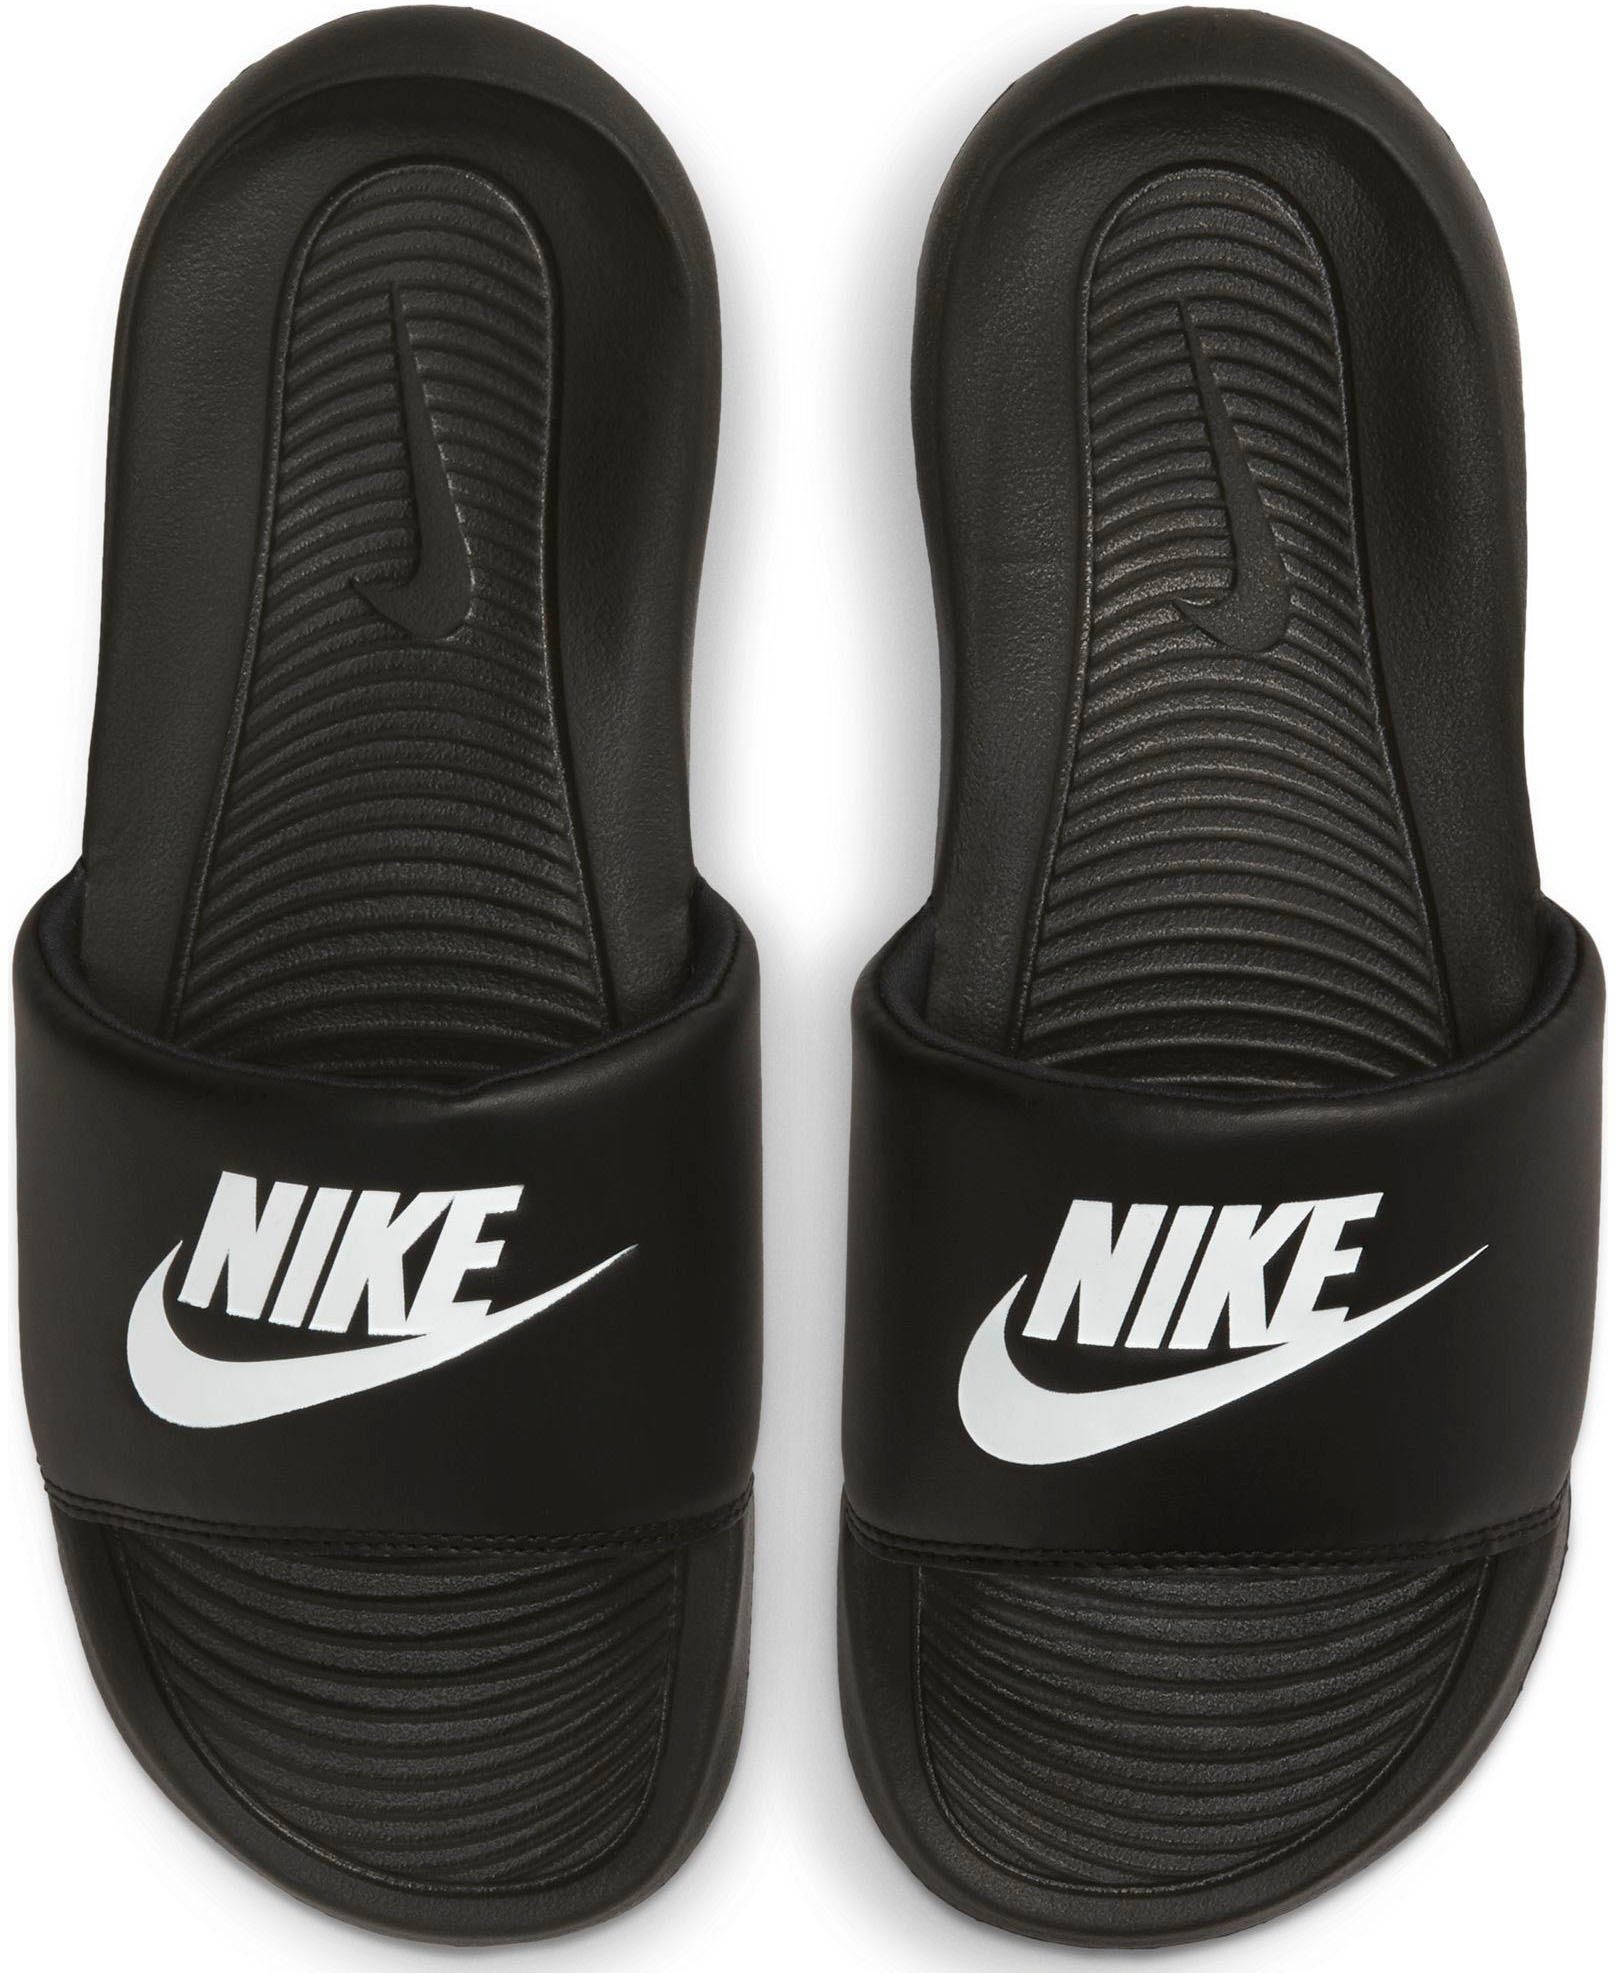 Nike Sportswear VICTORI ONE SLIDE schwarz-weiß Badesandale